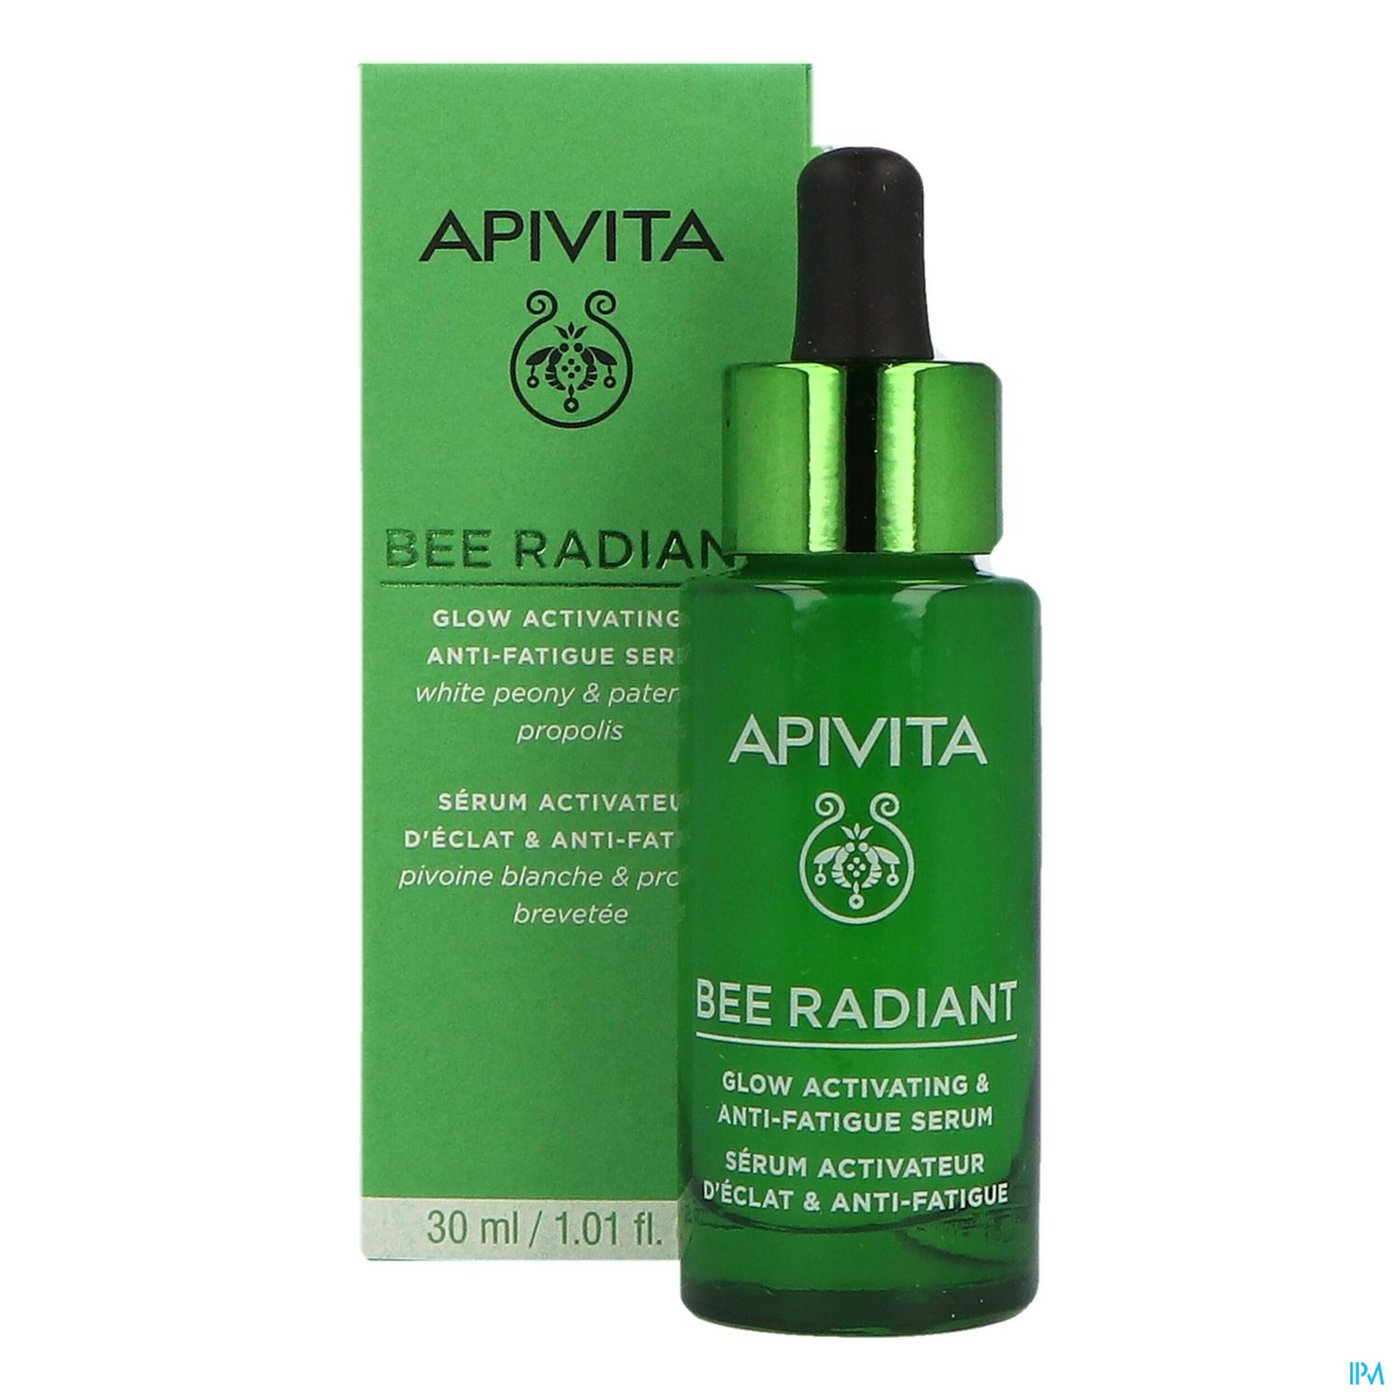 Apivita Bee Radiant Glow Activ.&a/fatig.serum 30ml productshot